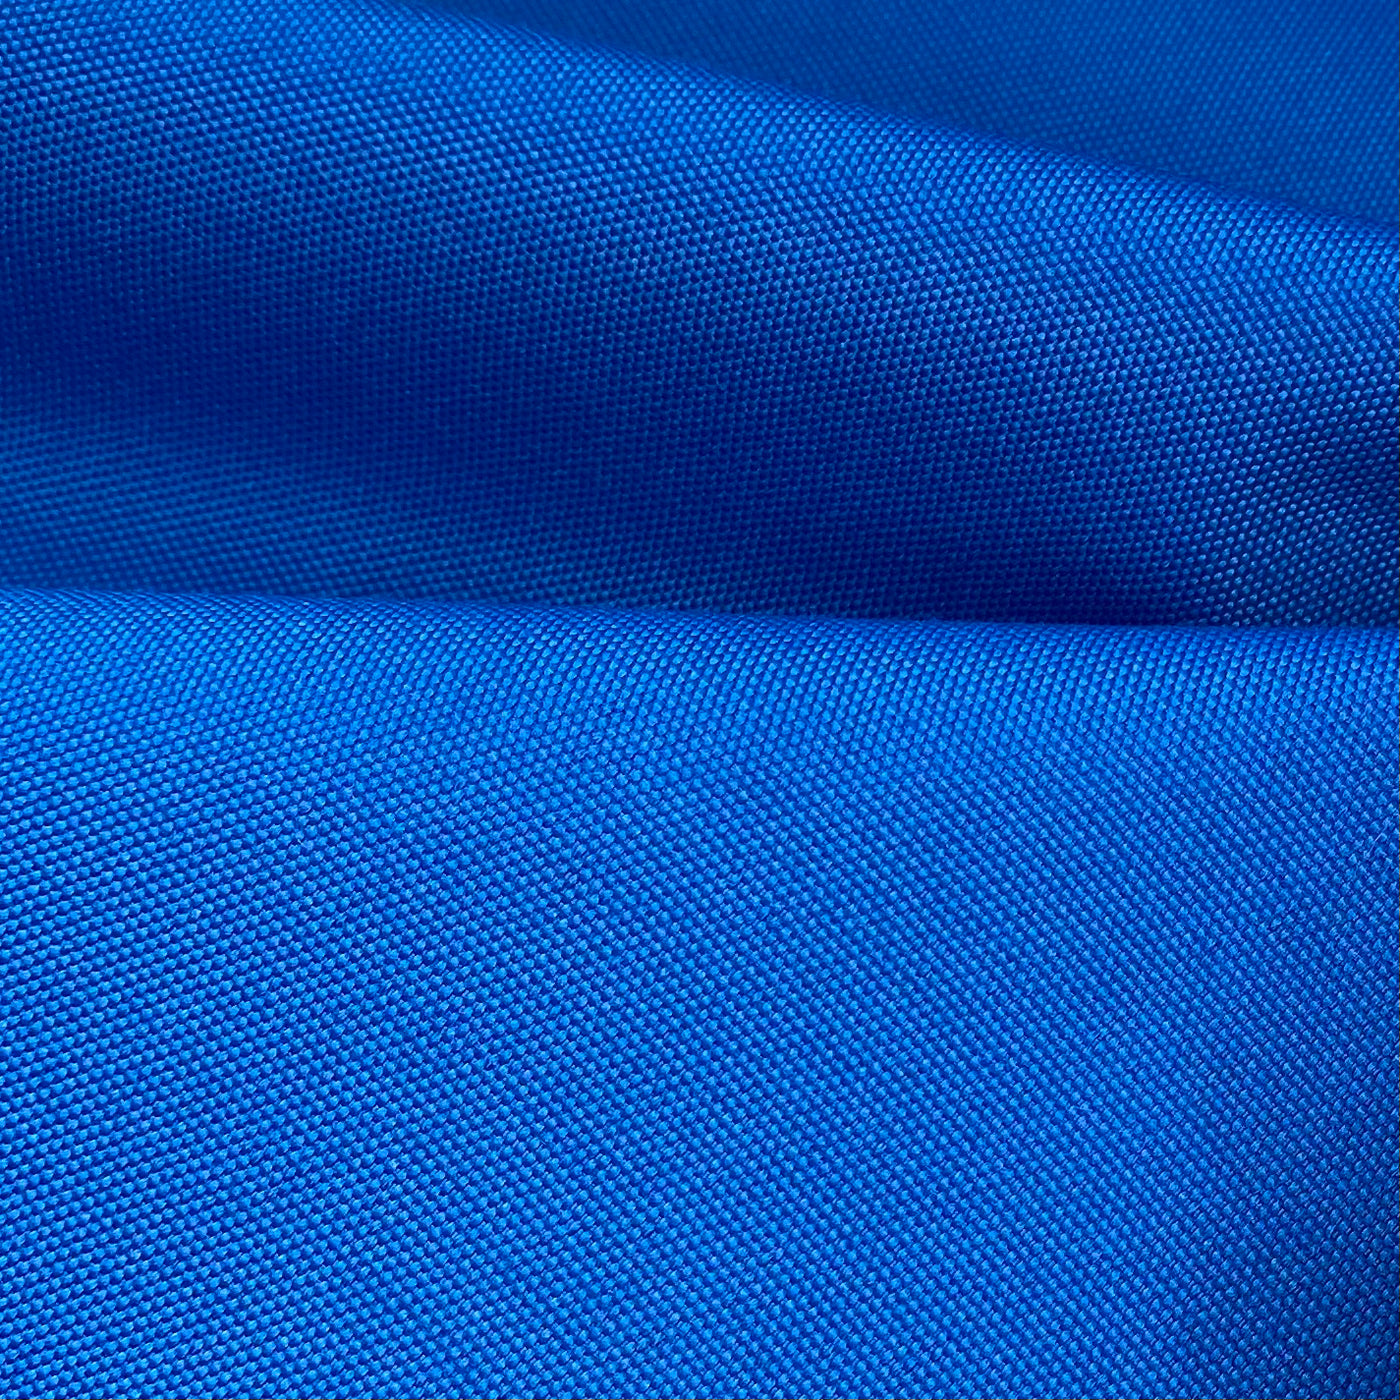 Cordura Upholstery - 1000 Denier - Blue